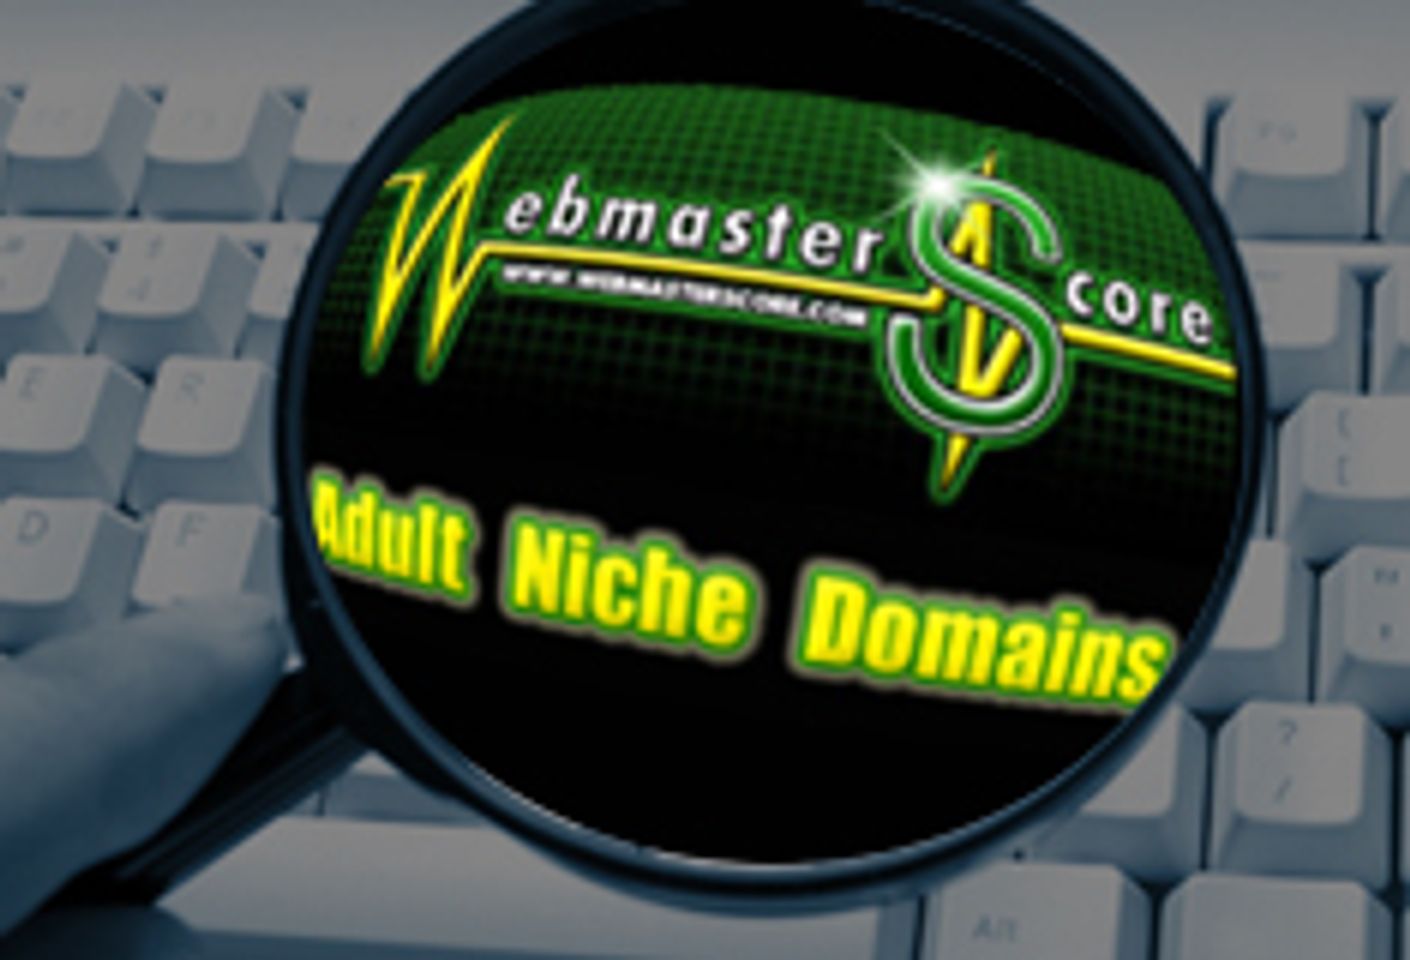 WebmasterScore.com Launches Free Adult Niche Domains Systems